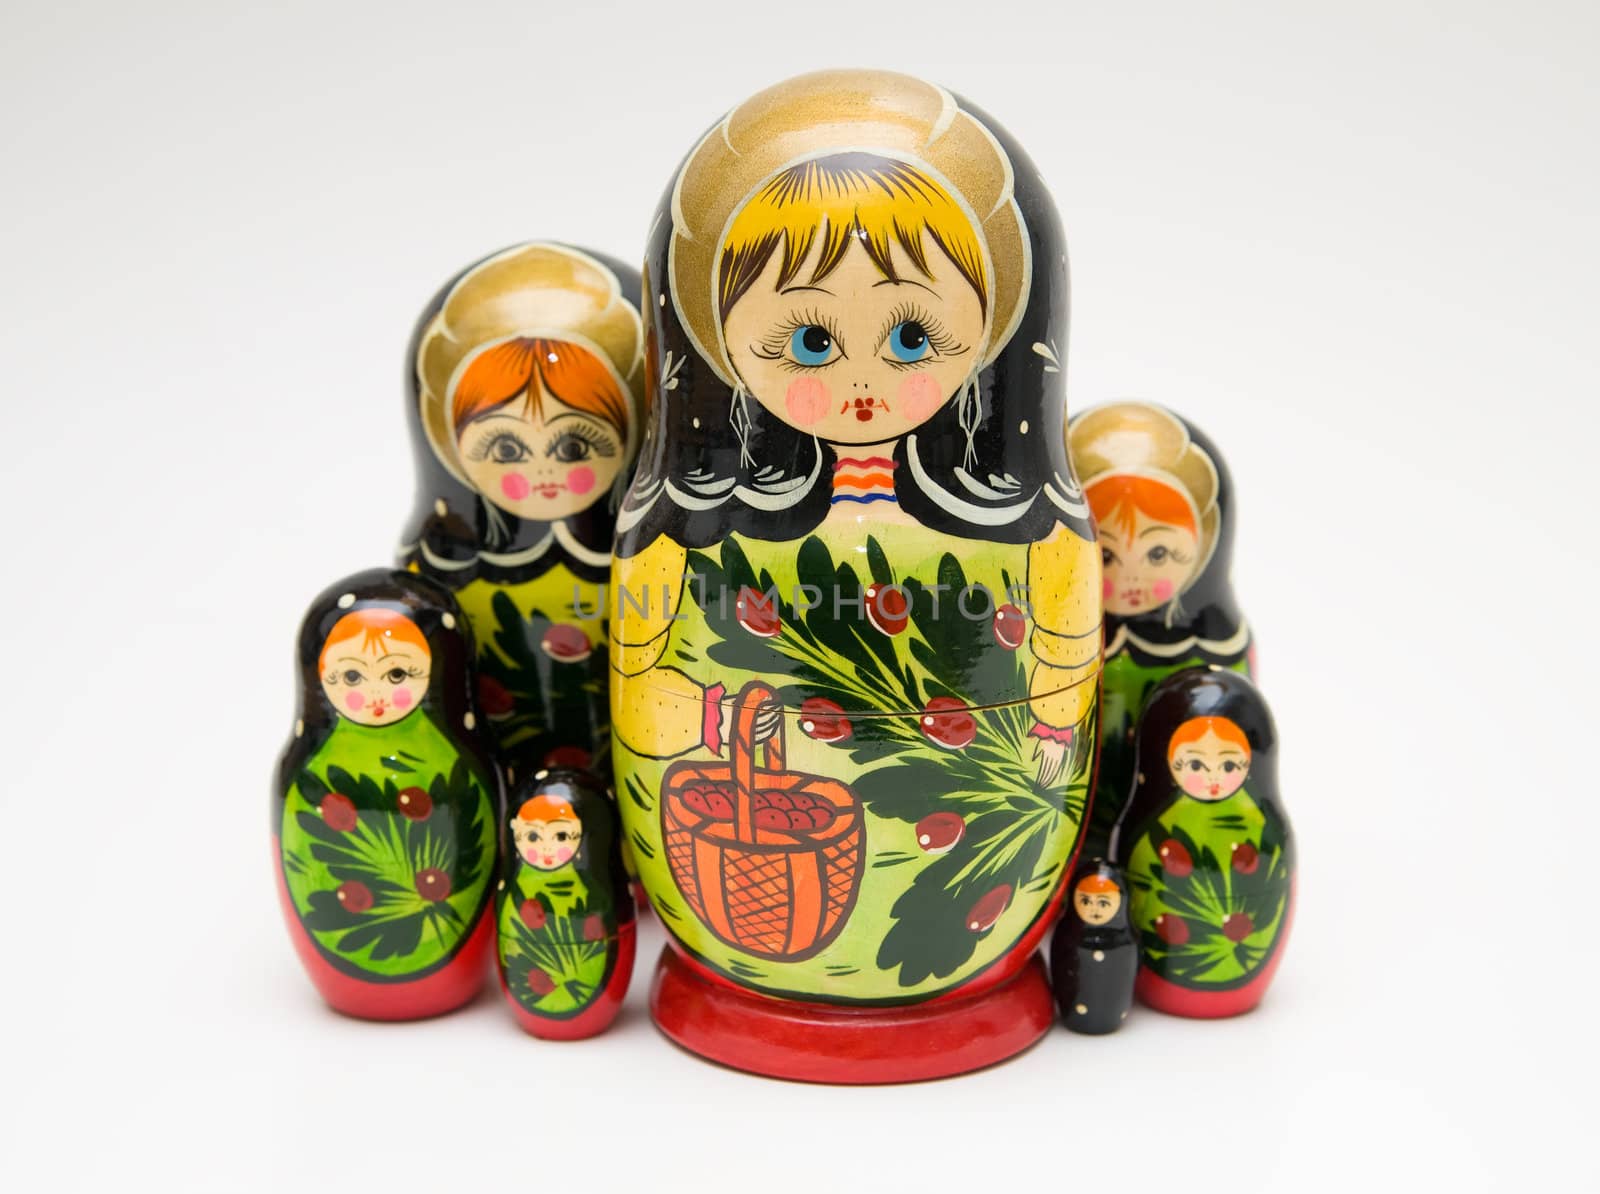 russian matryoshka doll on white background